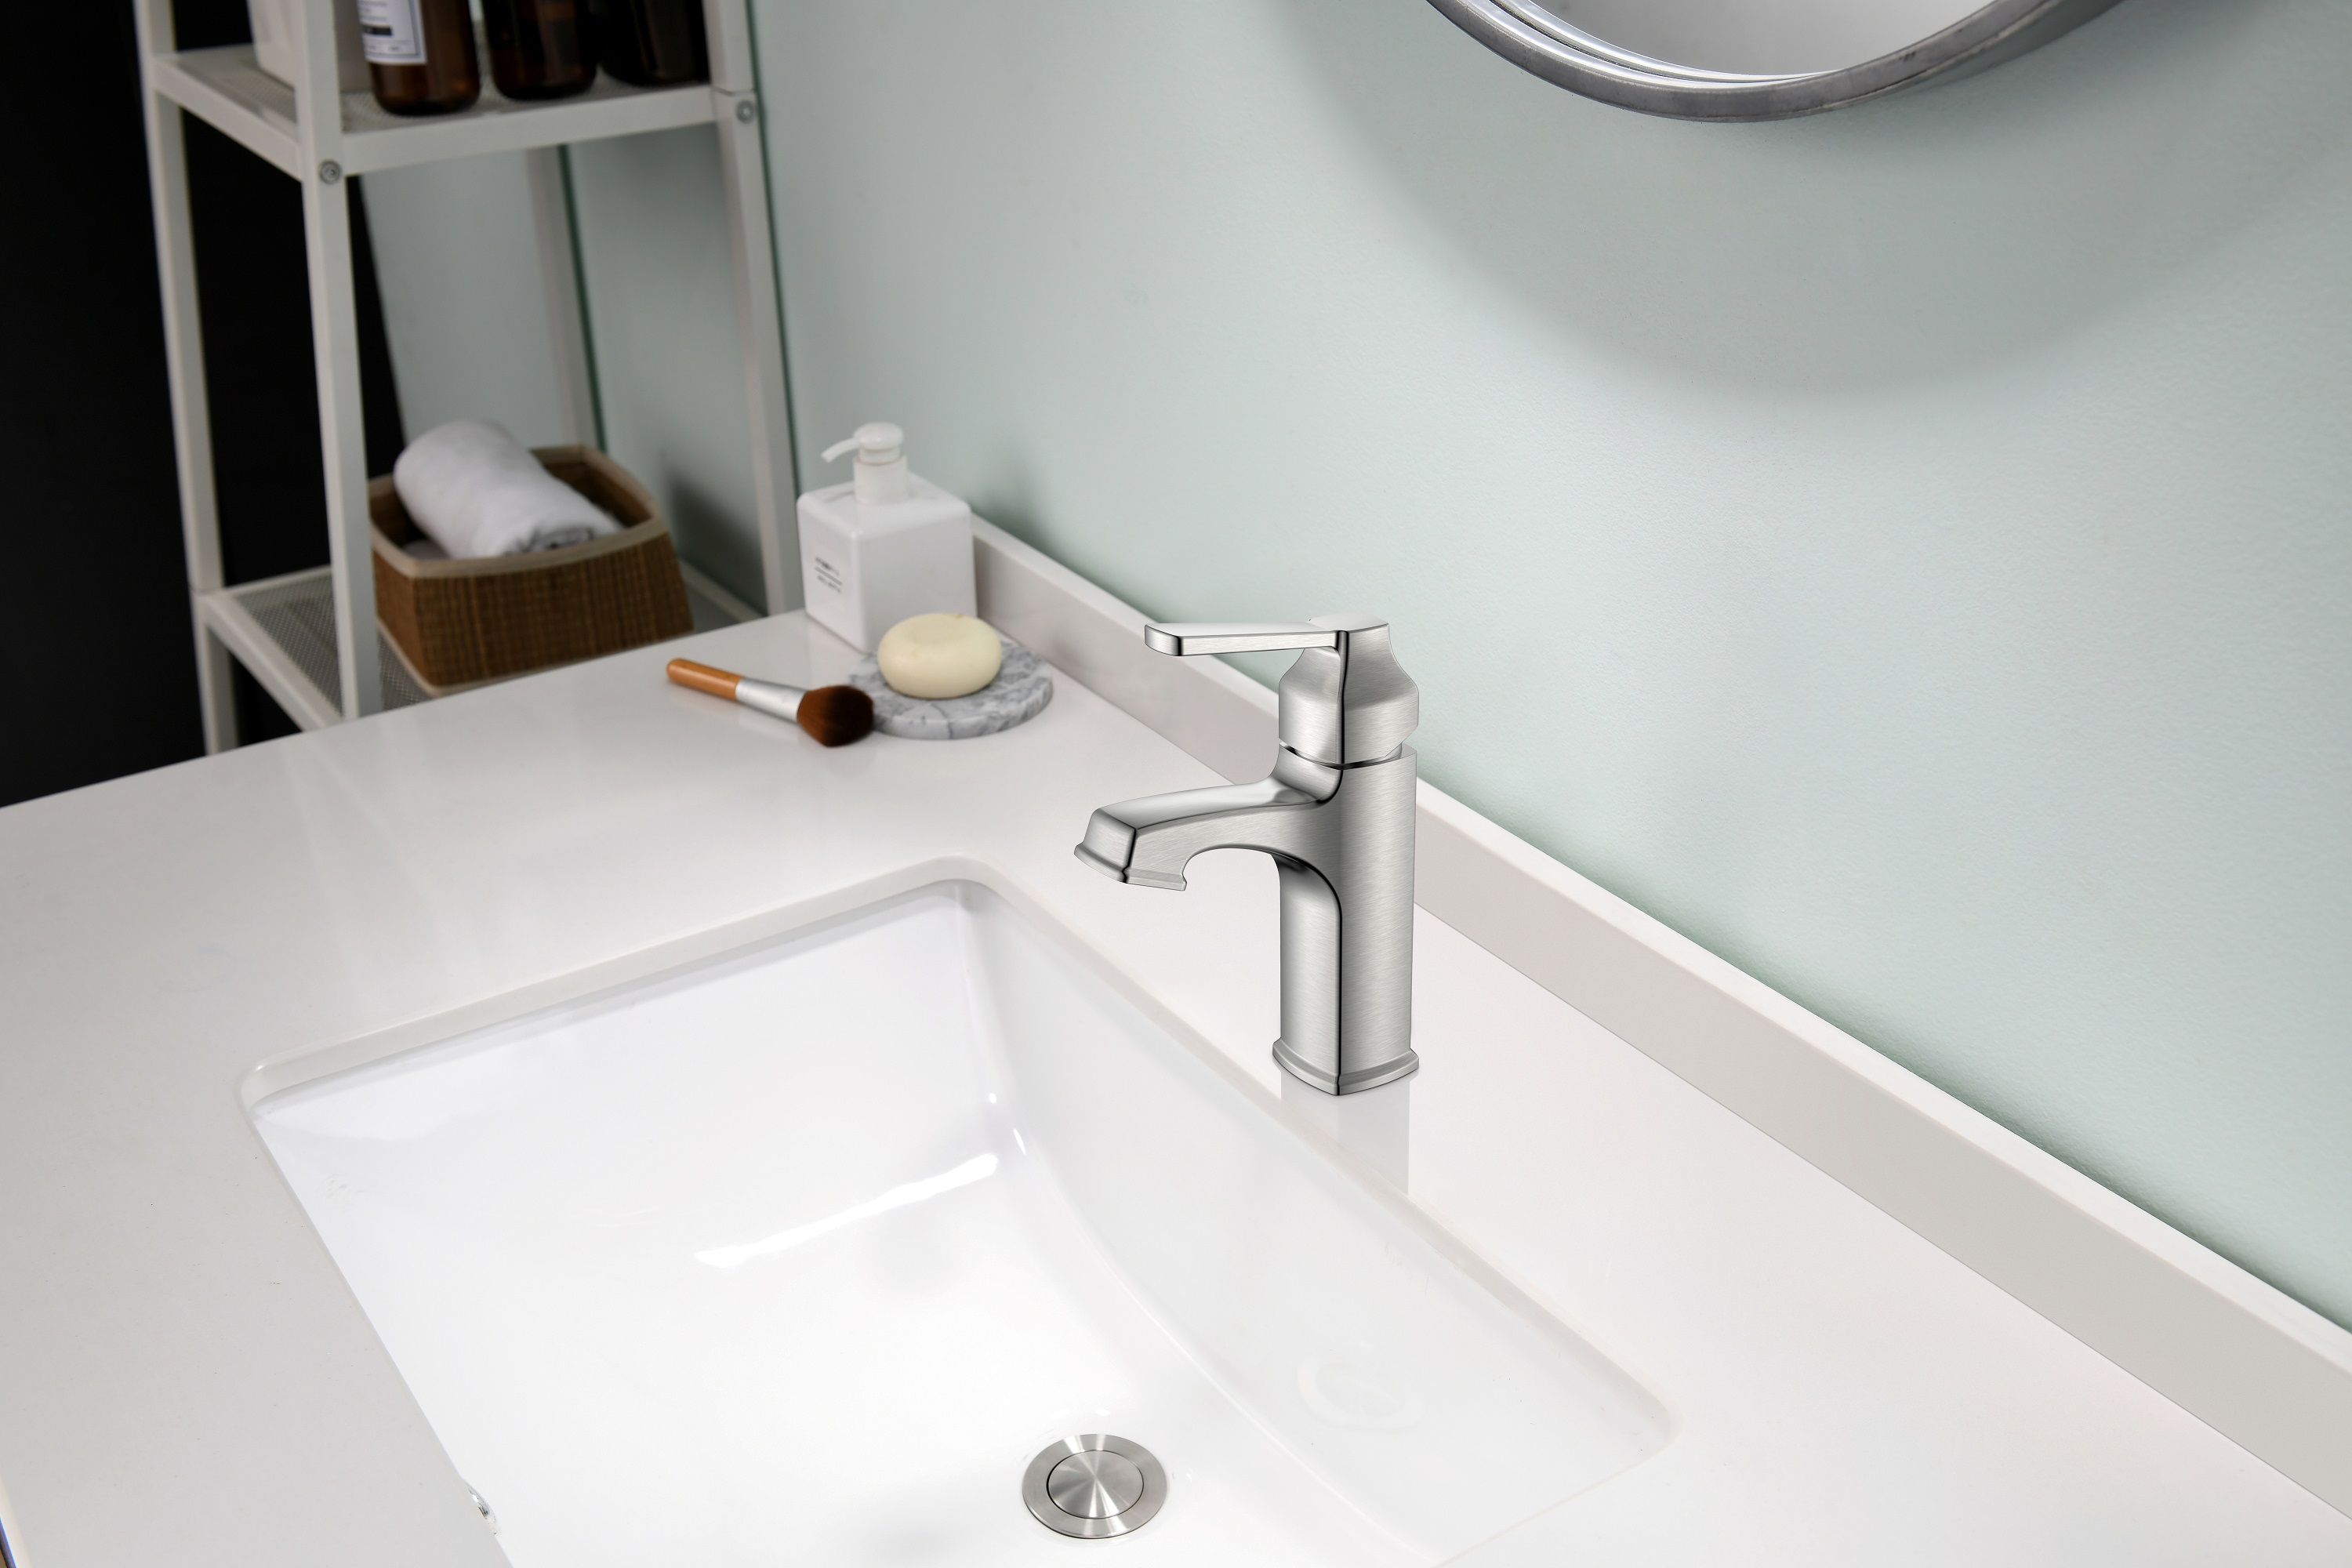 Matte Black Classical Square Shape Single Handle Basin Faucet For Bathroom